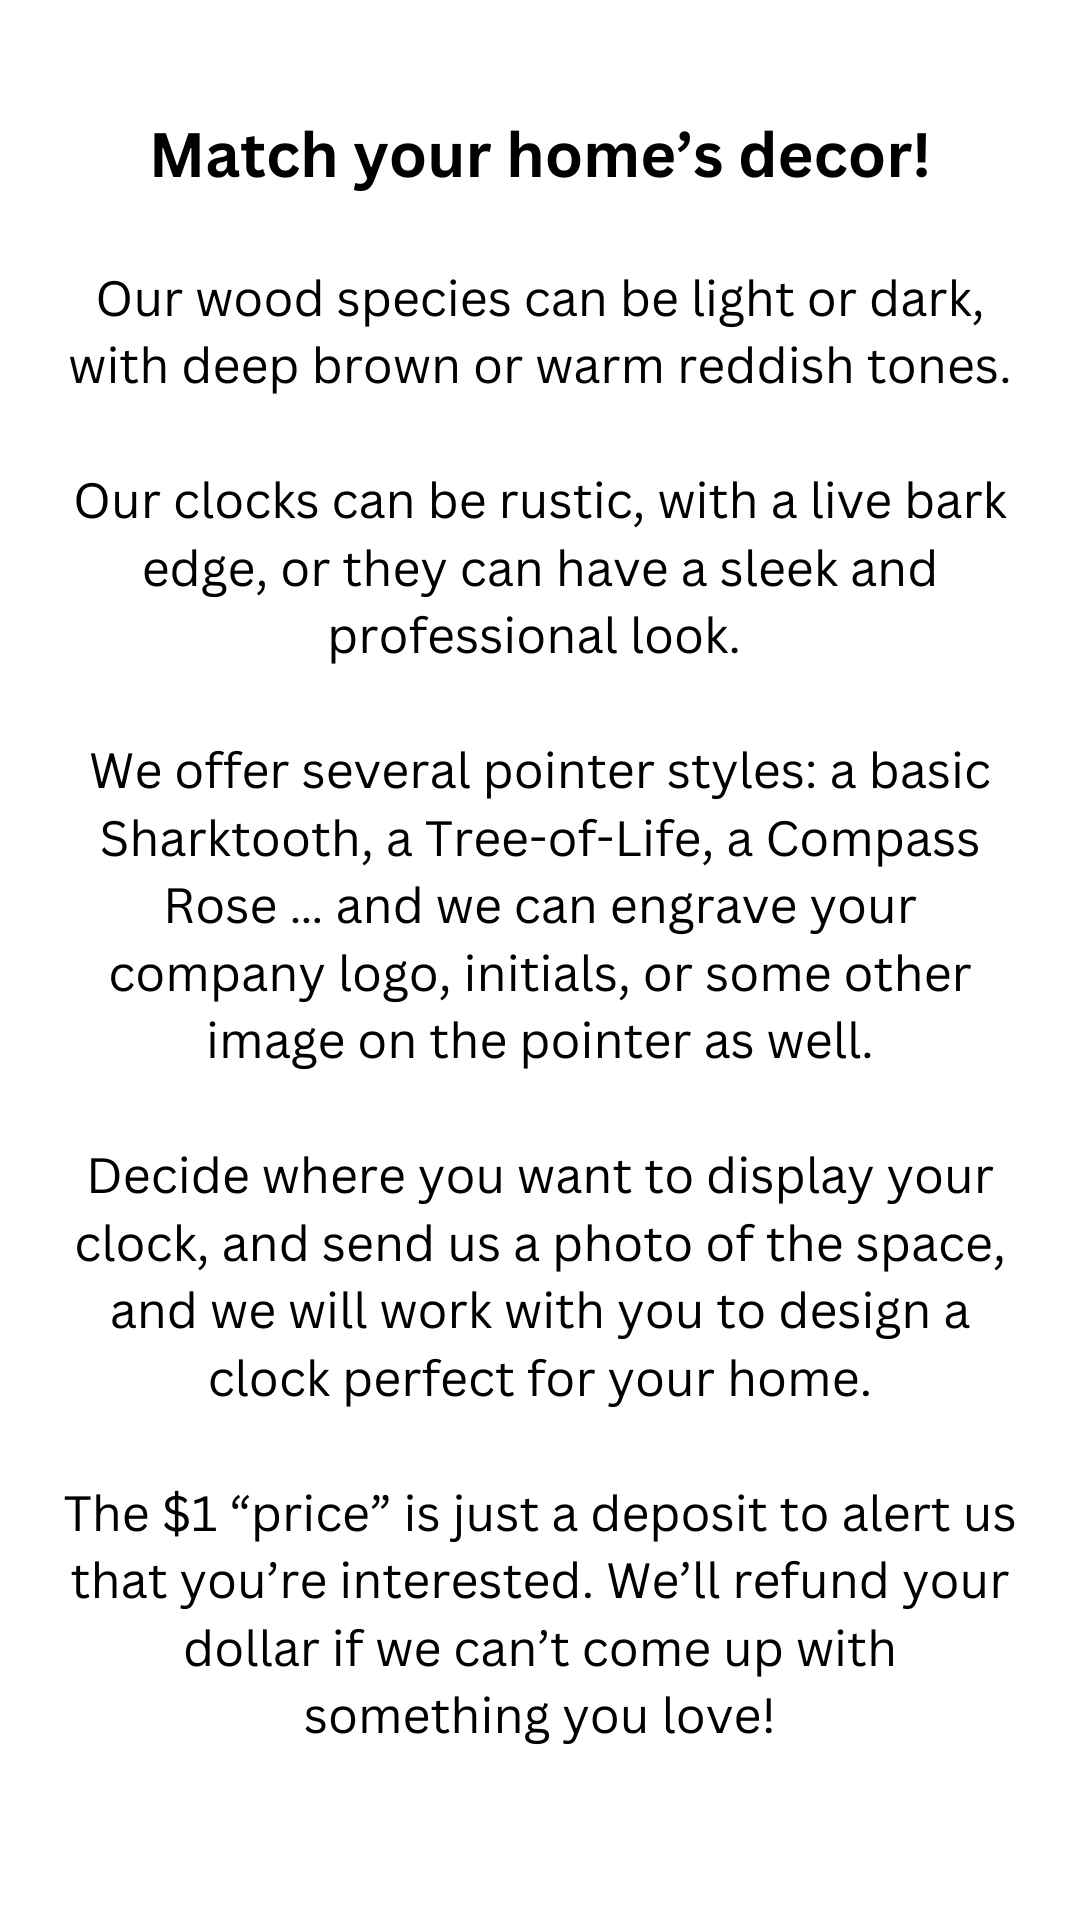 Your Custom Clock